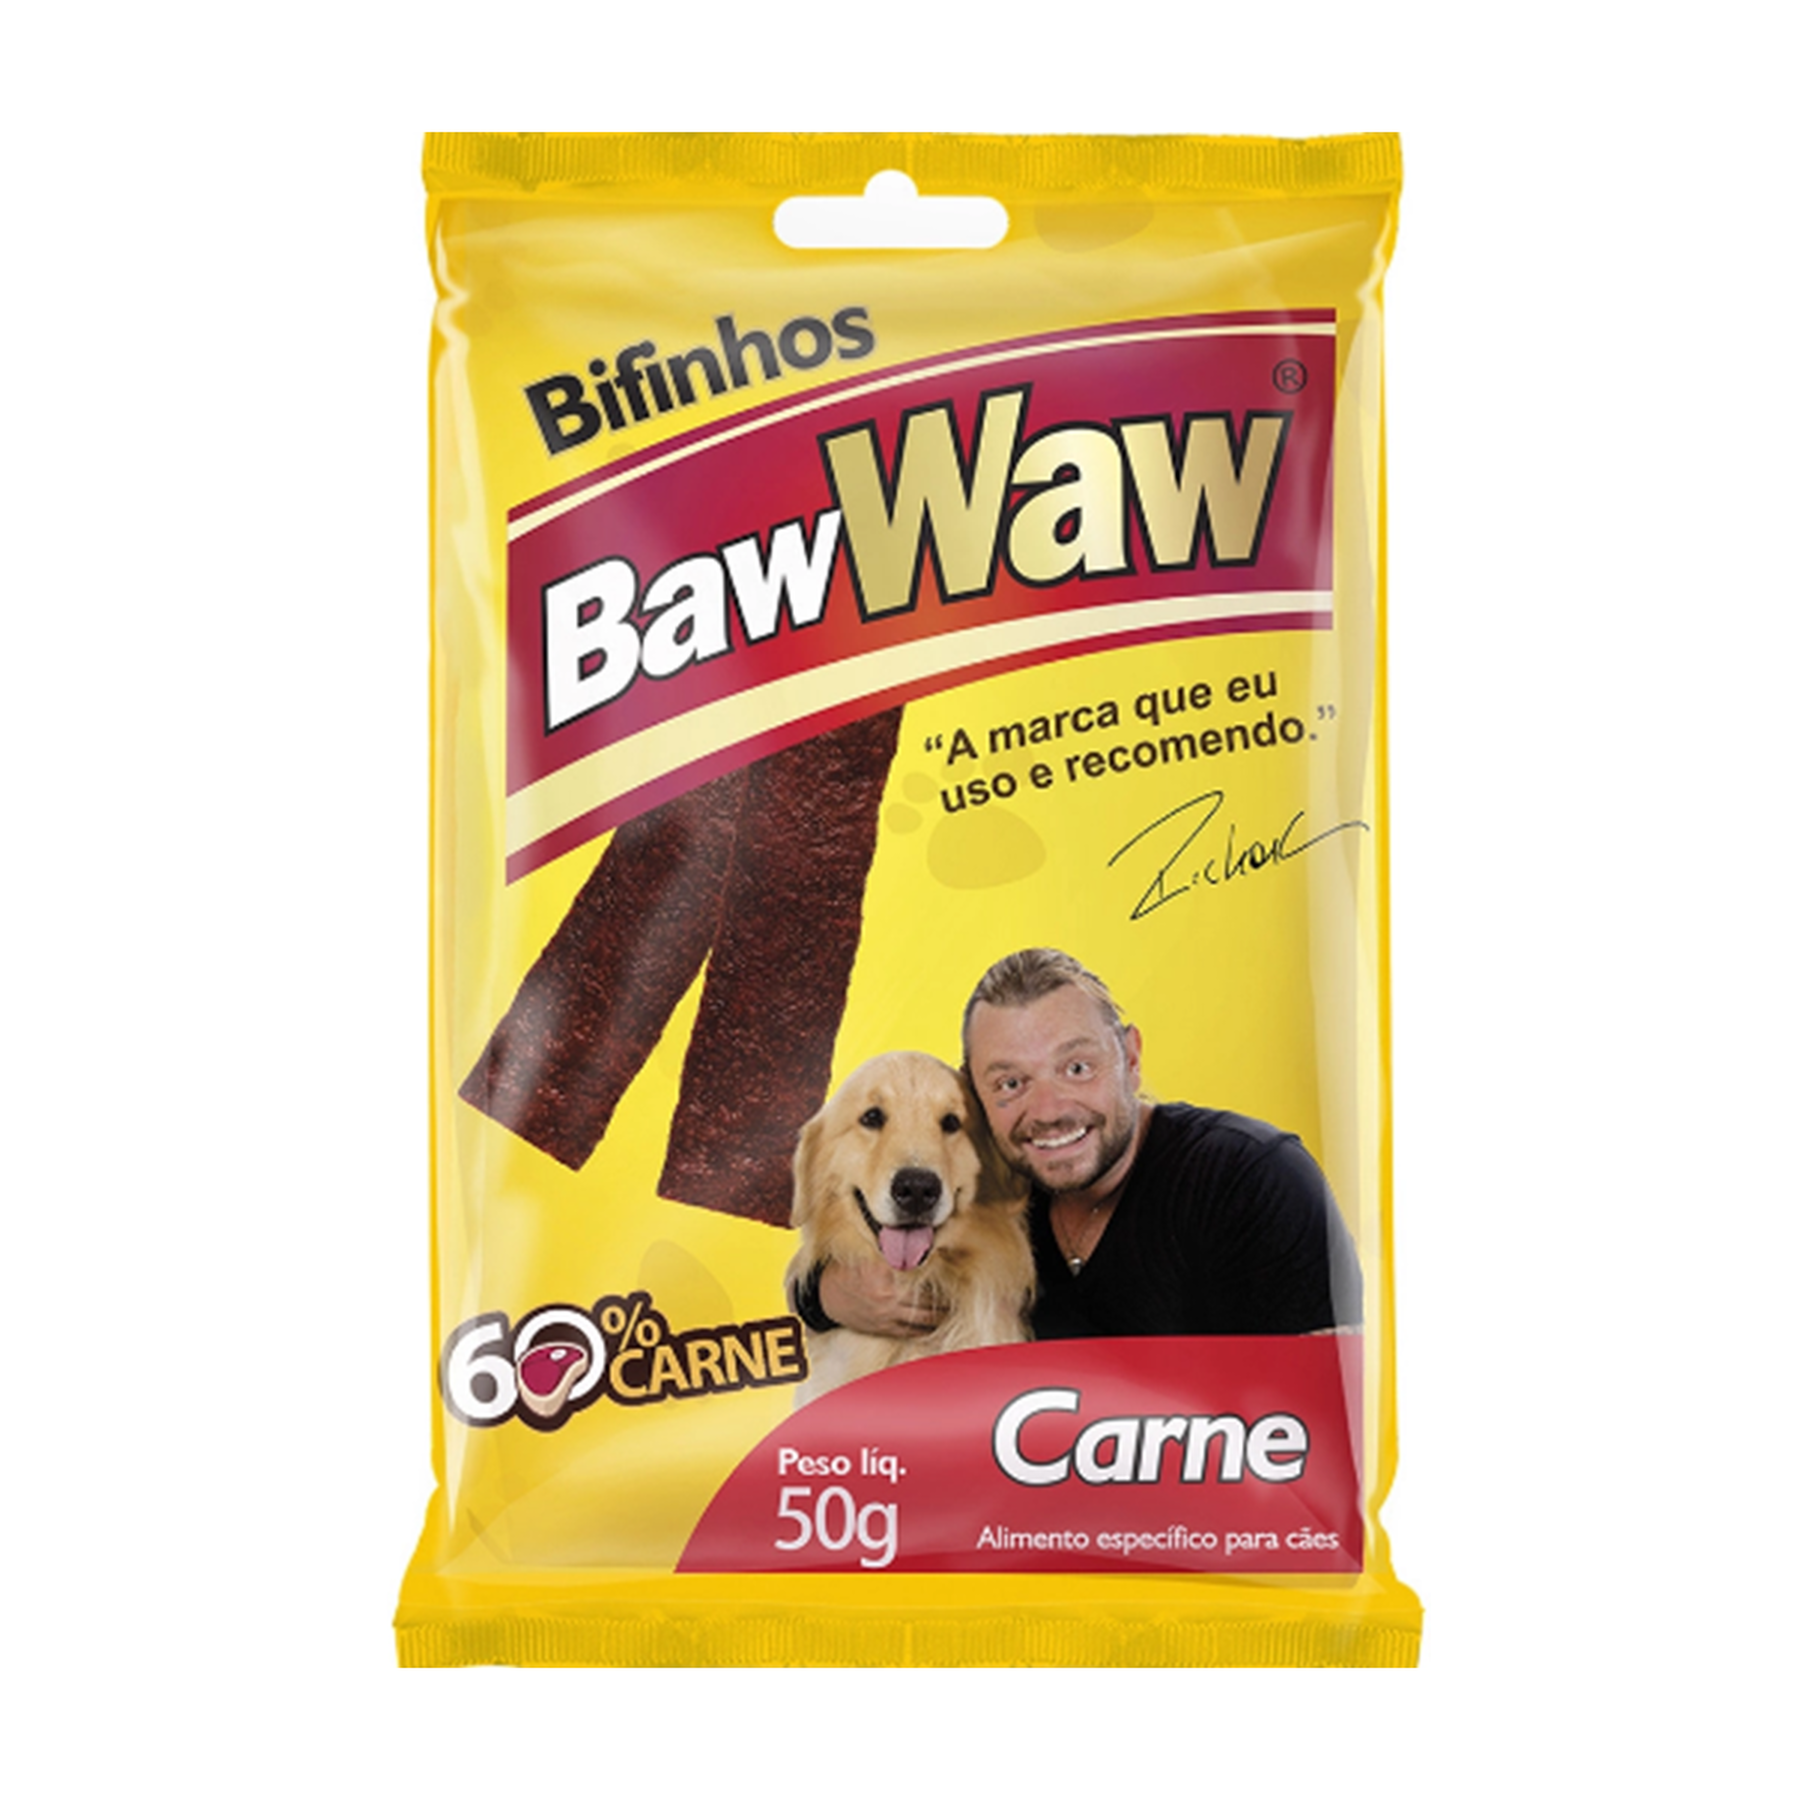 Bifinho para Cães Carne Baw Waw Pacote 50g